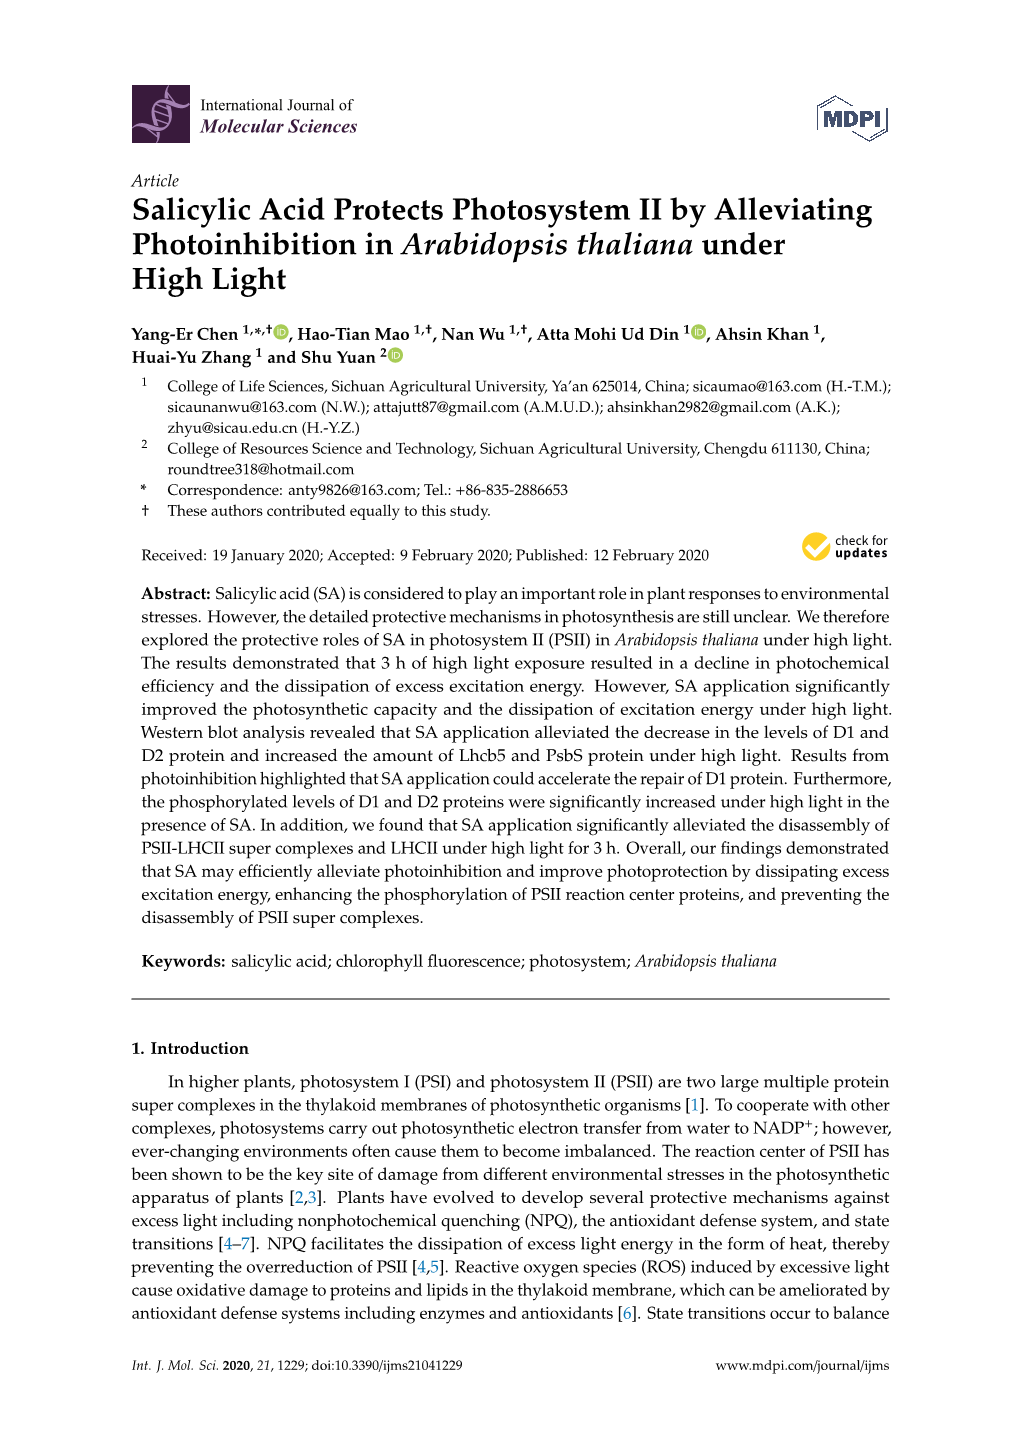 Salicylic Acid Protects Photosystem II by Alleviating Photoinhibition in Arabidopsis Thaliana Under High Light